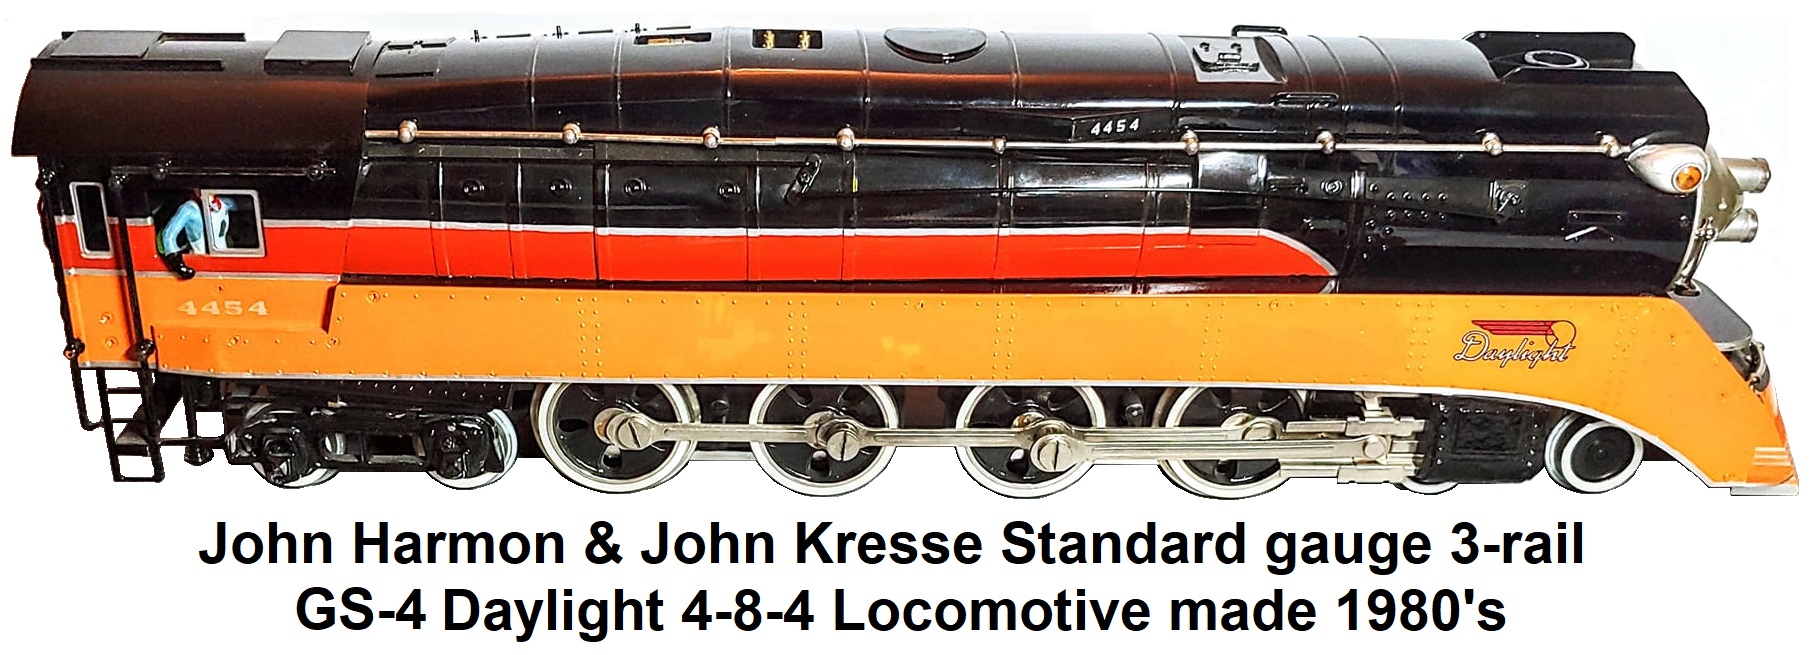 John Harmon & John Kresse Standard gauge GS-4 Southern Pacific Daylight loco circa 1980's